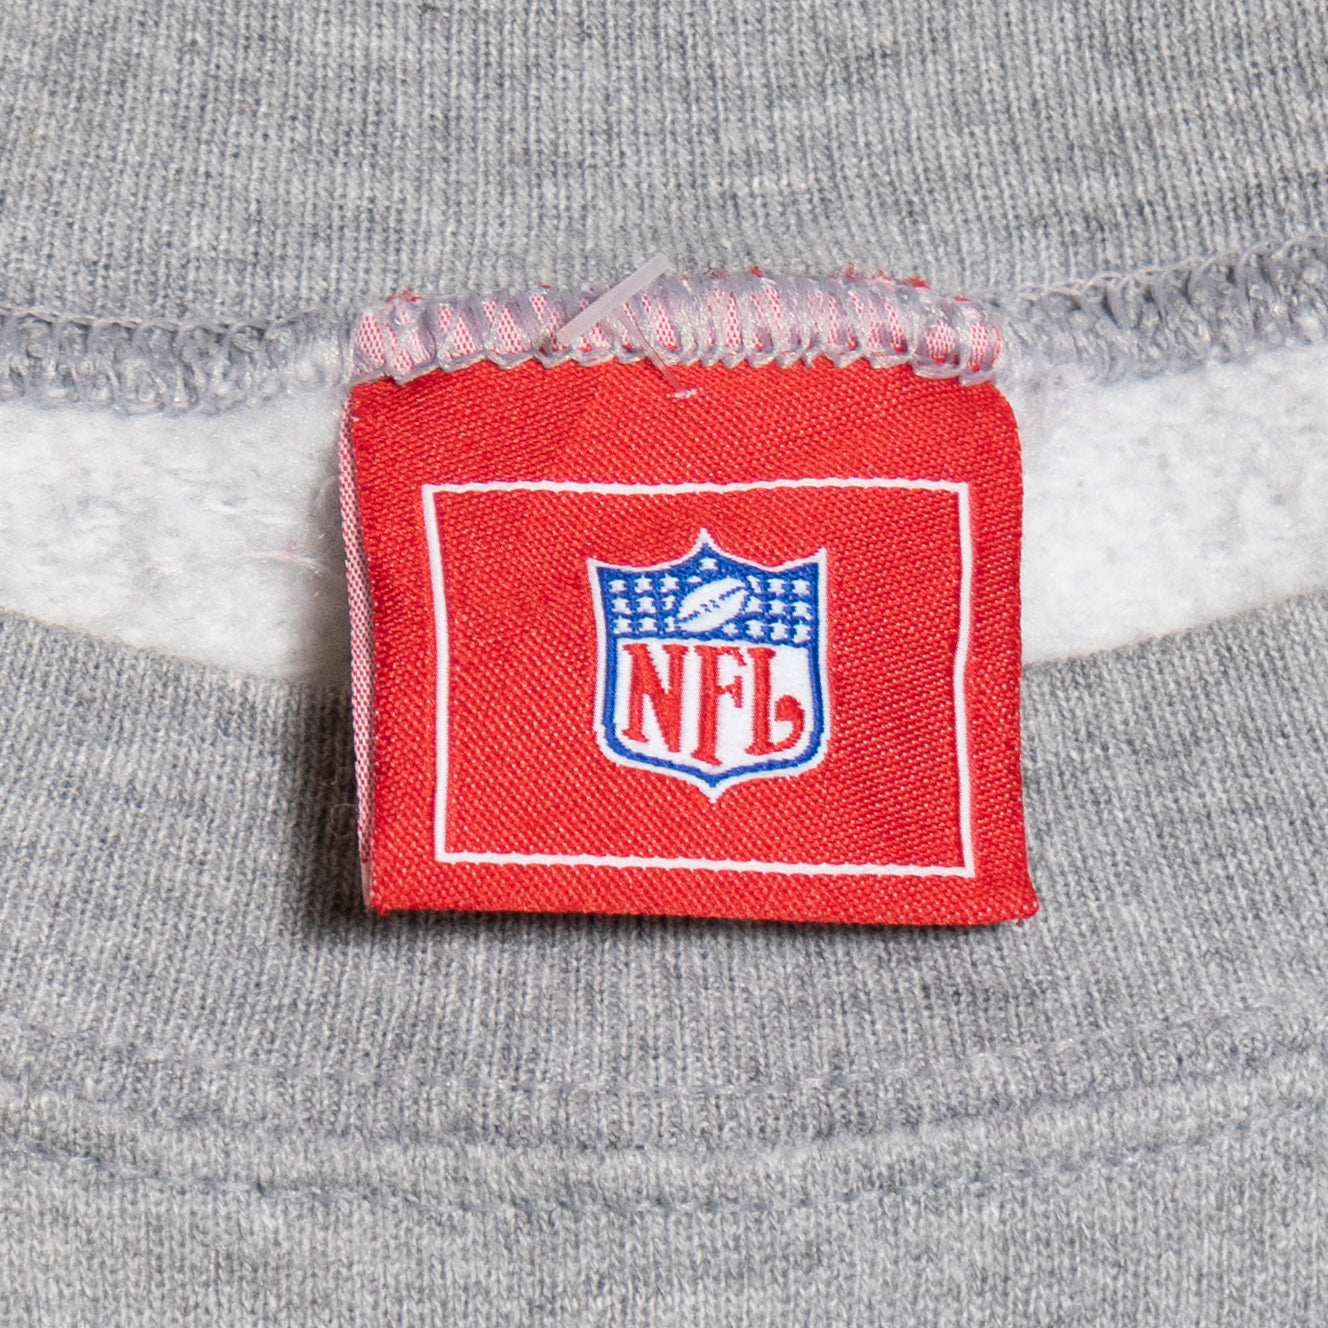 New England Patriots Sweater, XXL